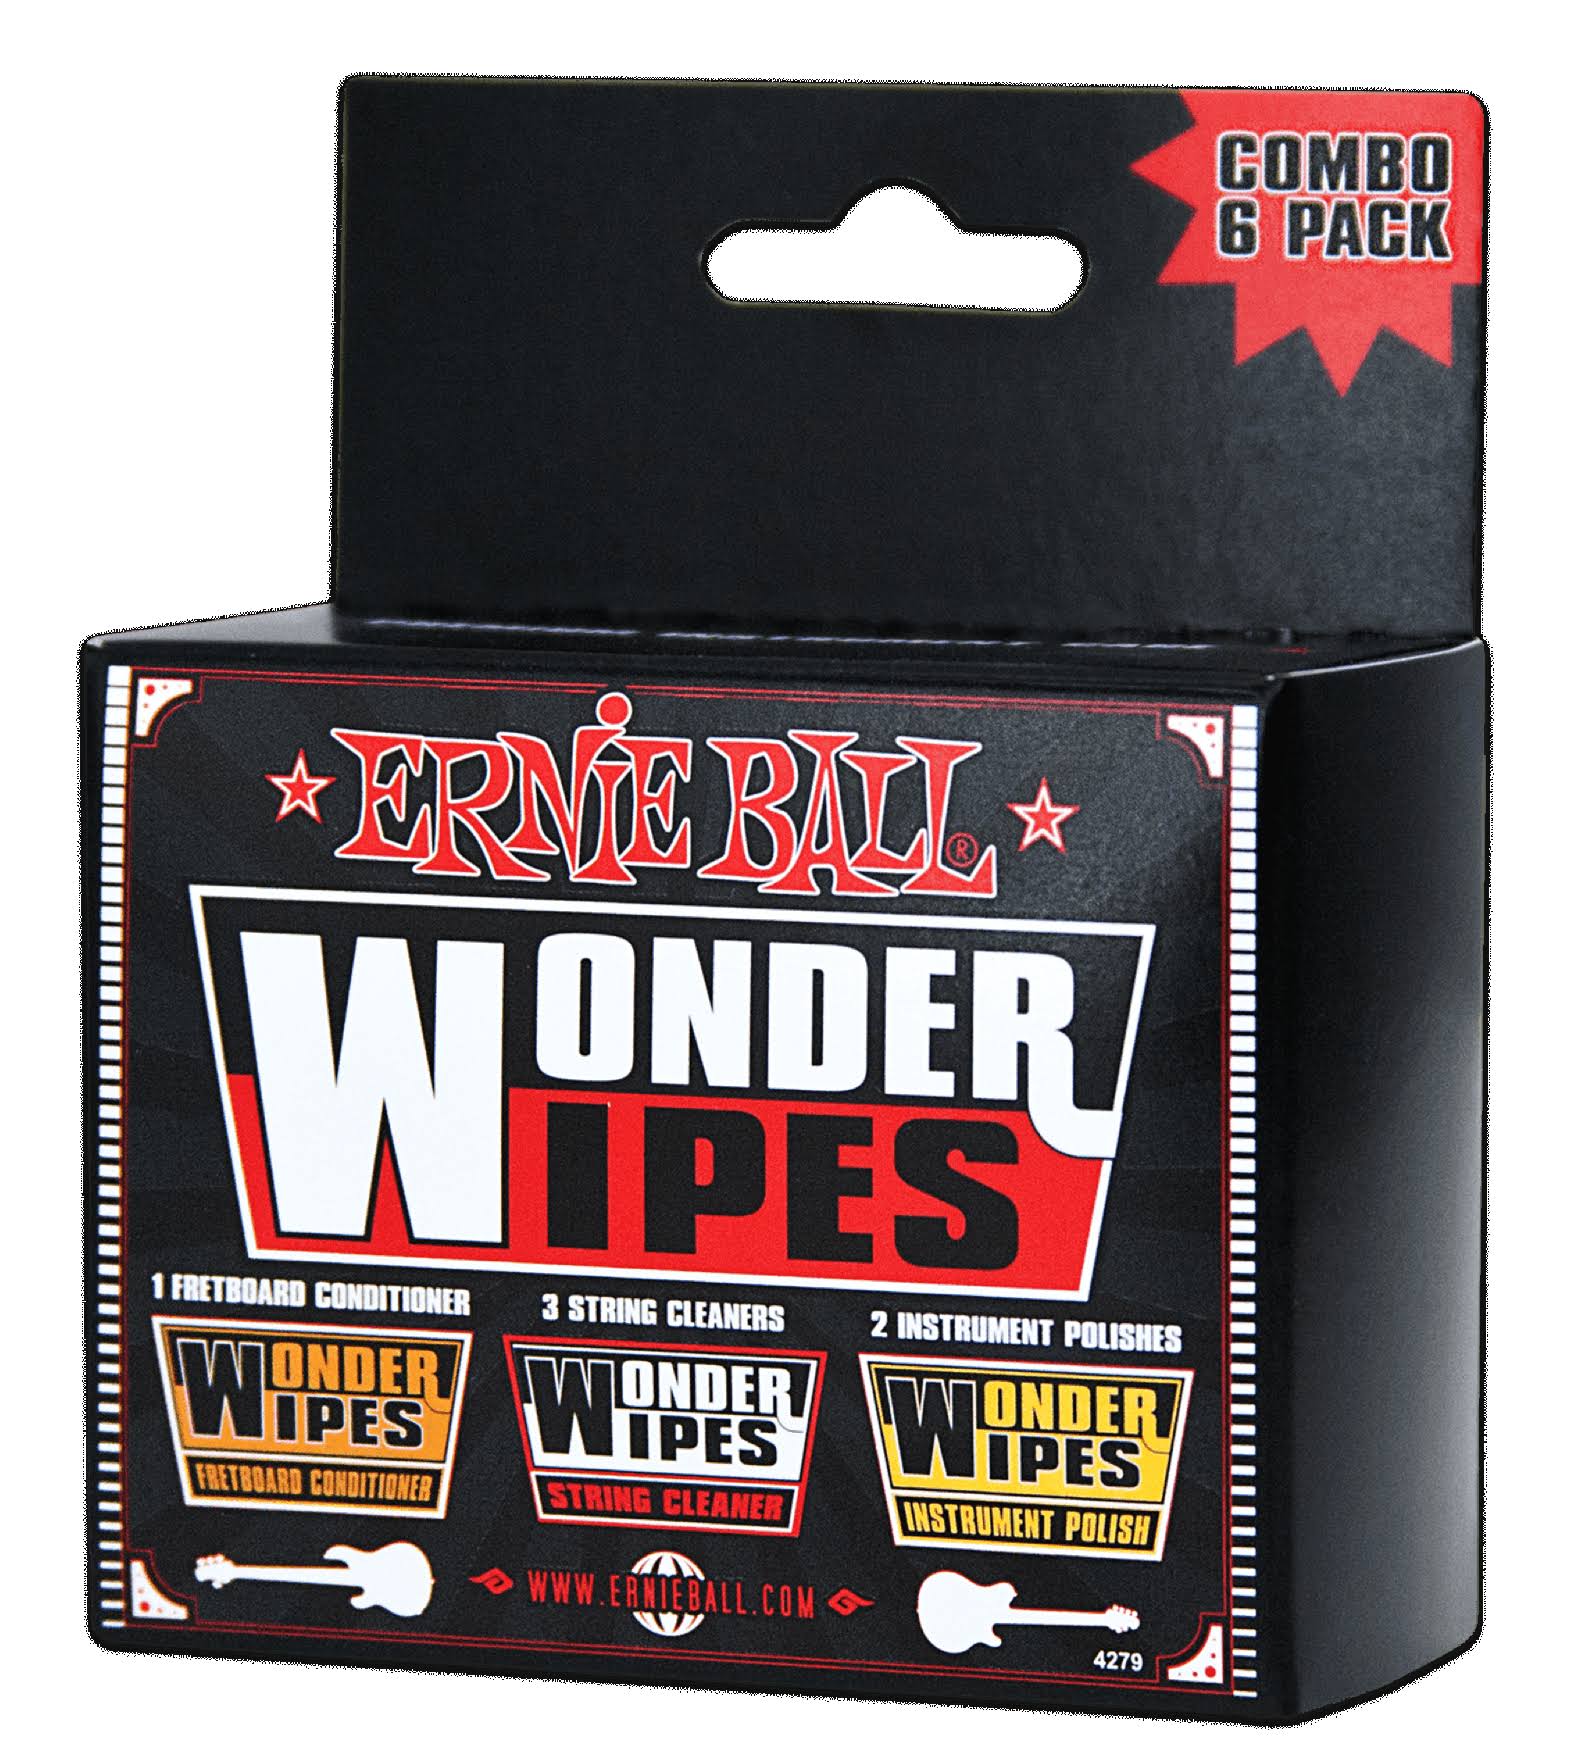 Ernie Ball Wonder Wipes Combo Pack - 6pk